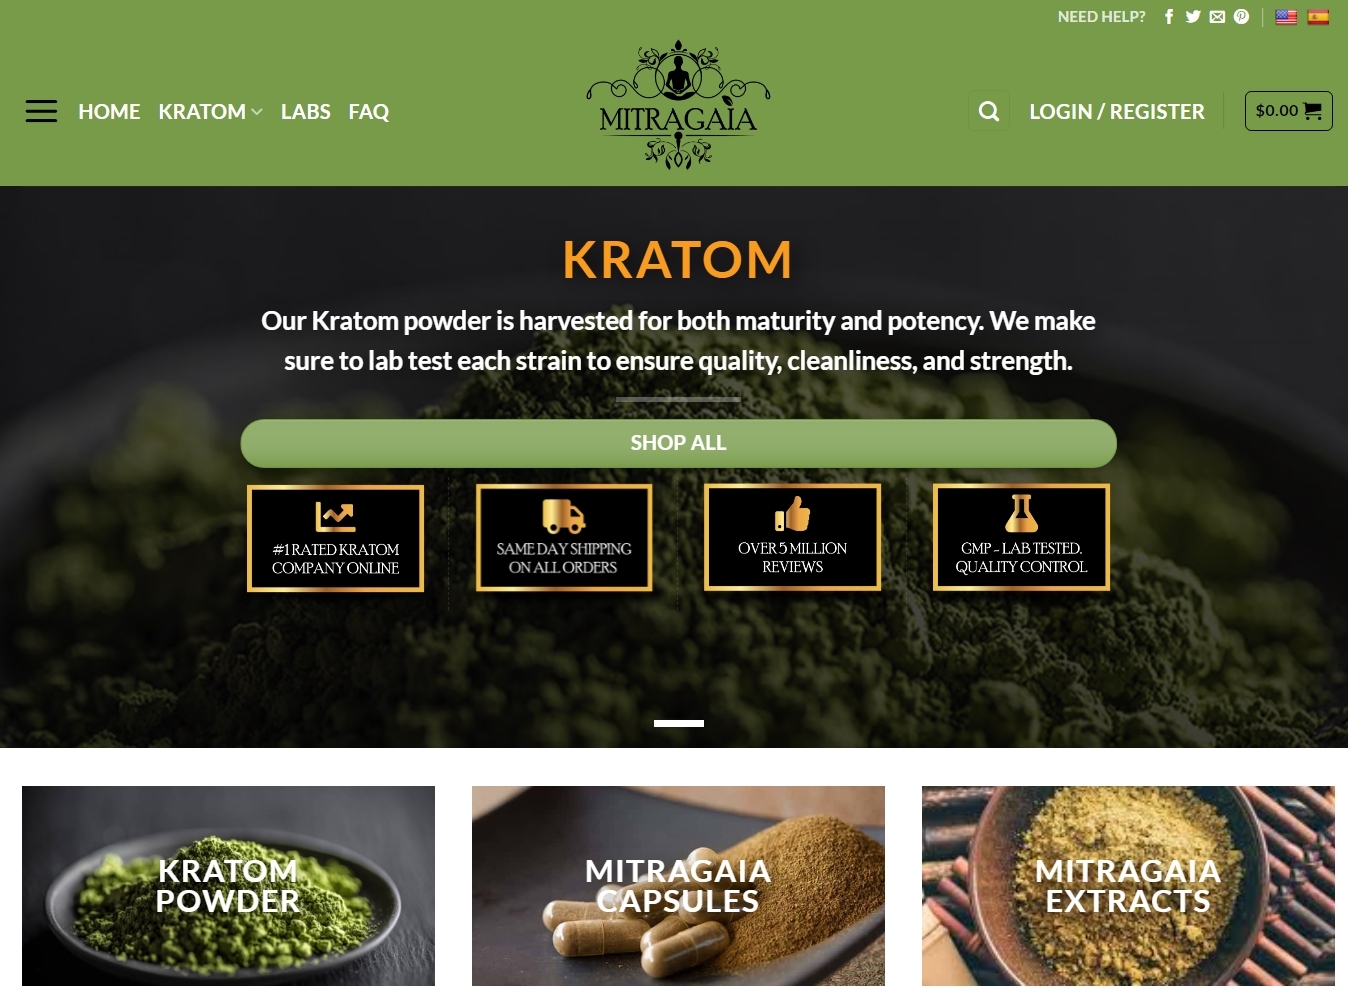 Mitragaia Best Expensive Kratom Vendor Homepage